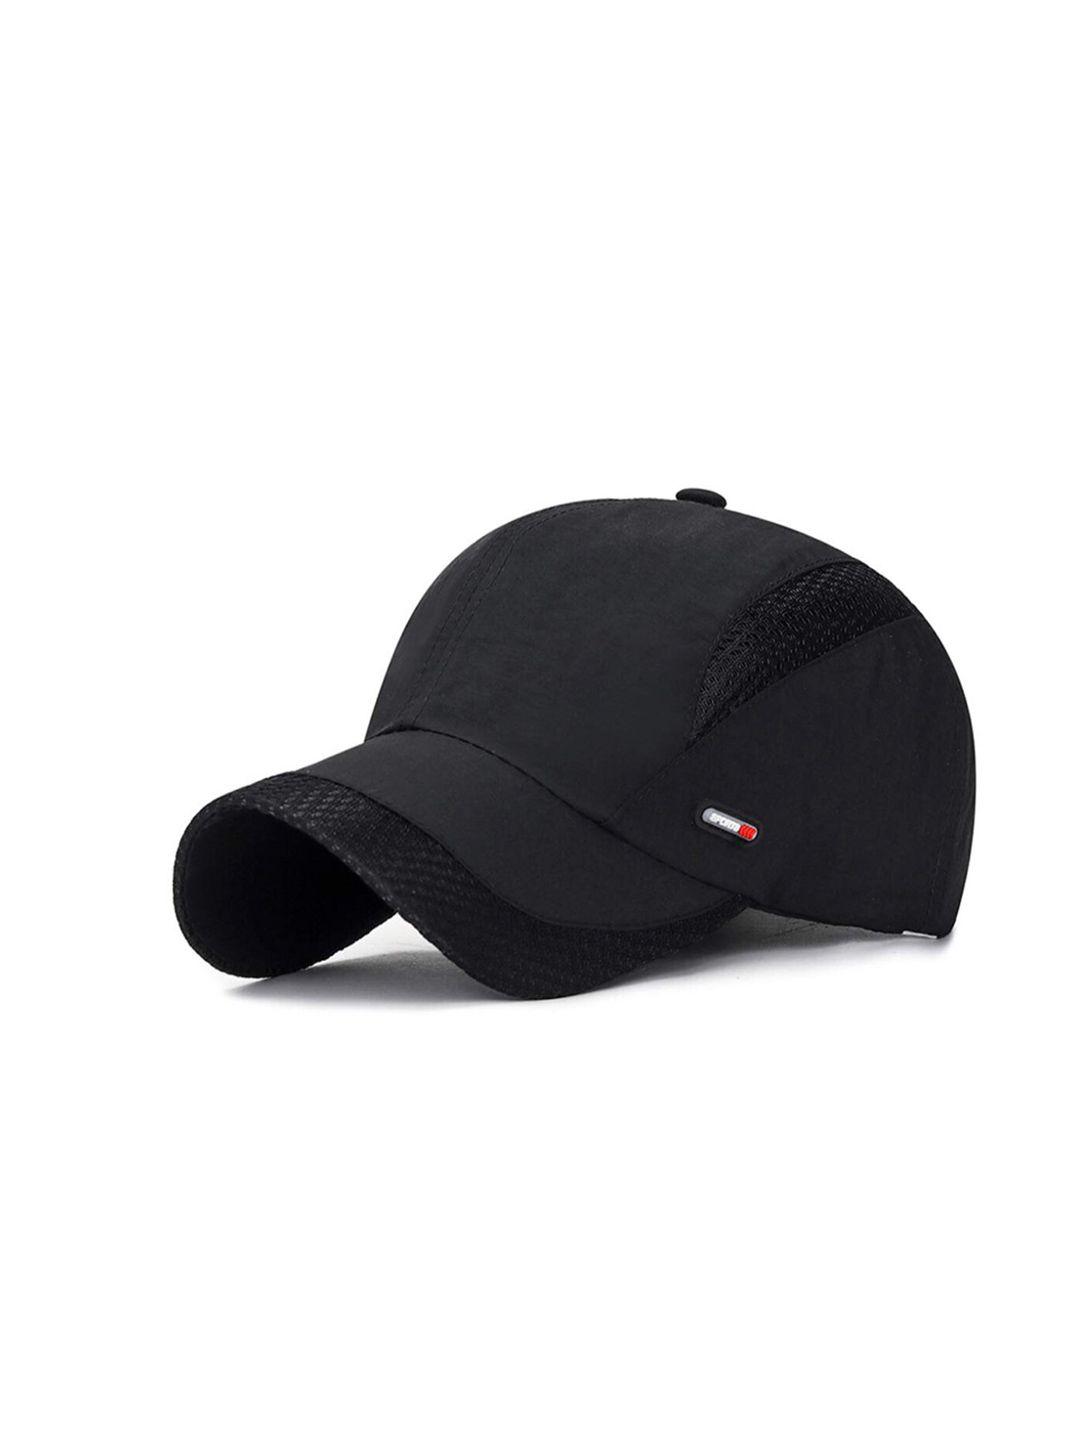 isweven-lightweight-snapback-baseball-cap